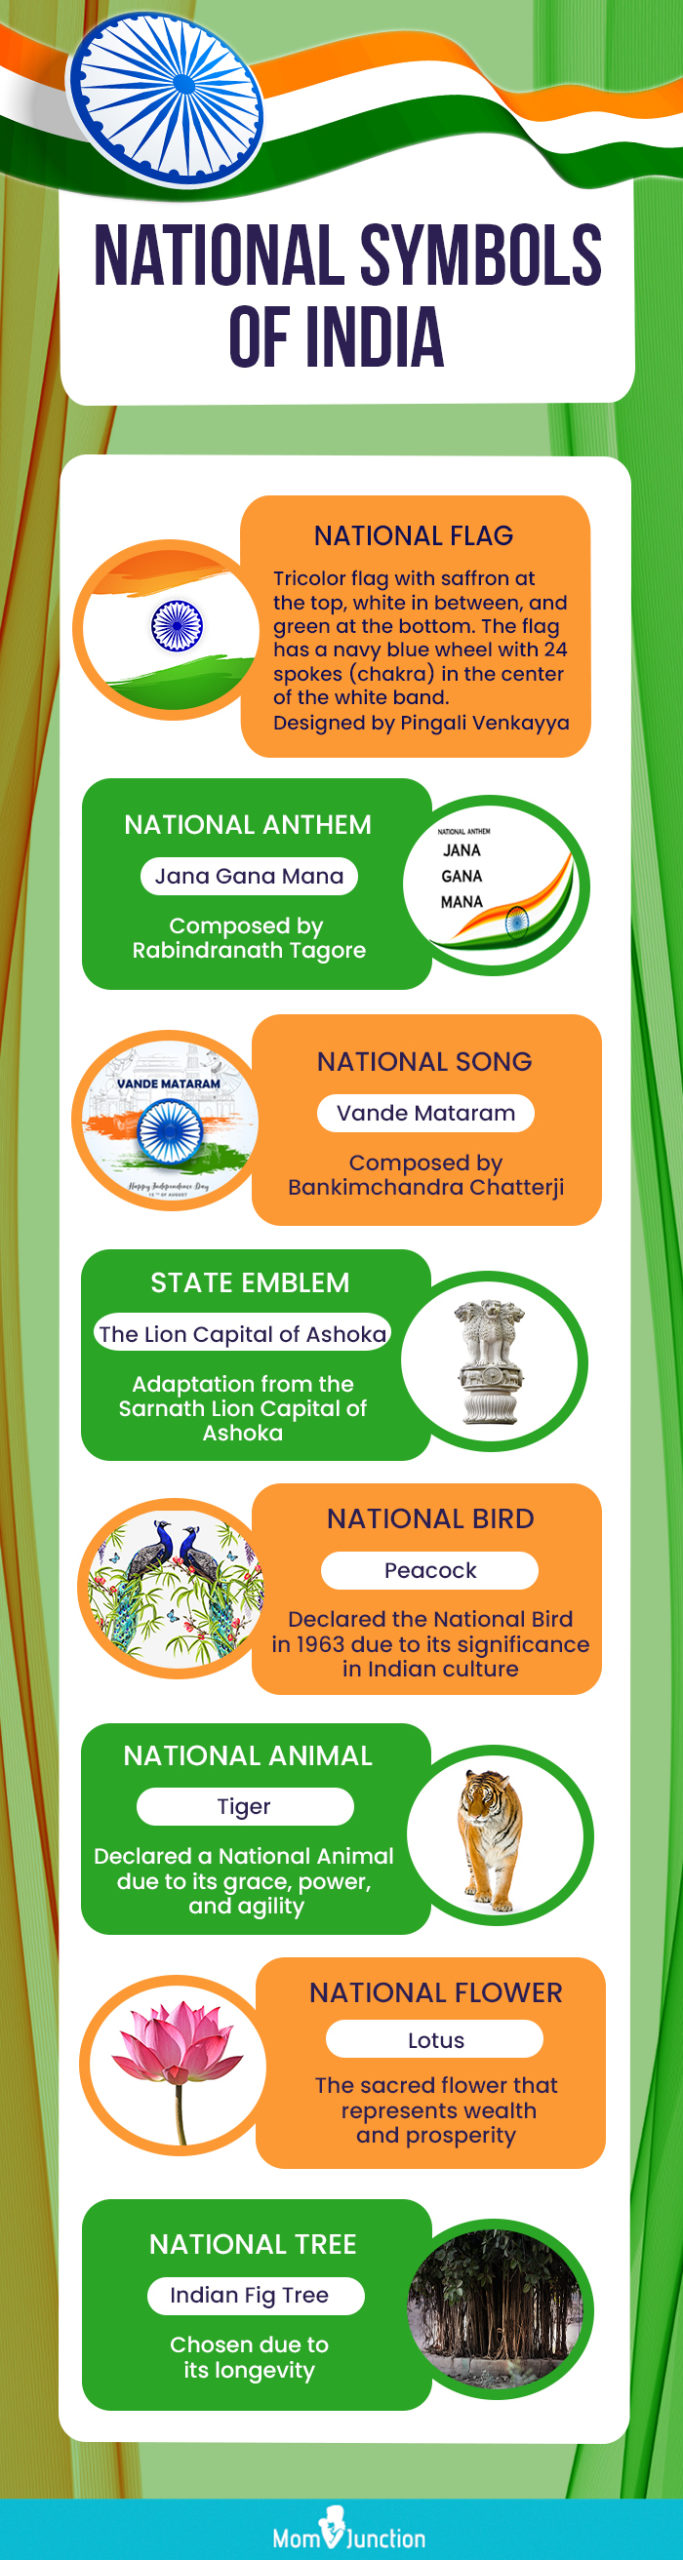 national symbols of india [infographic]